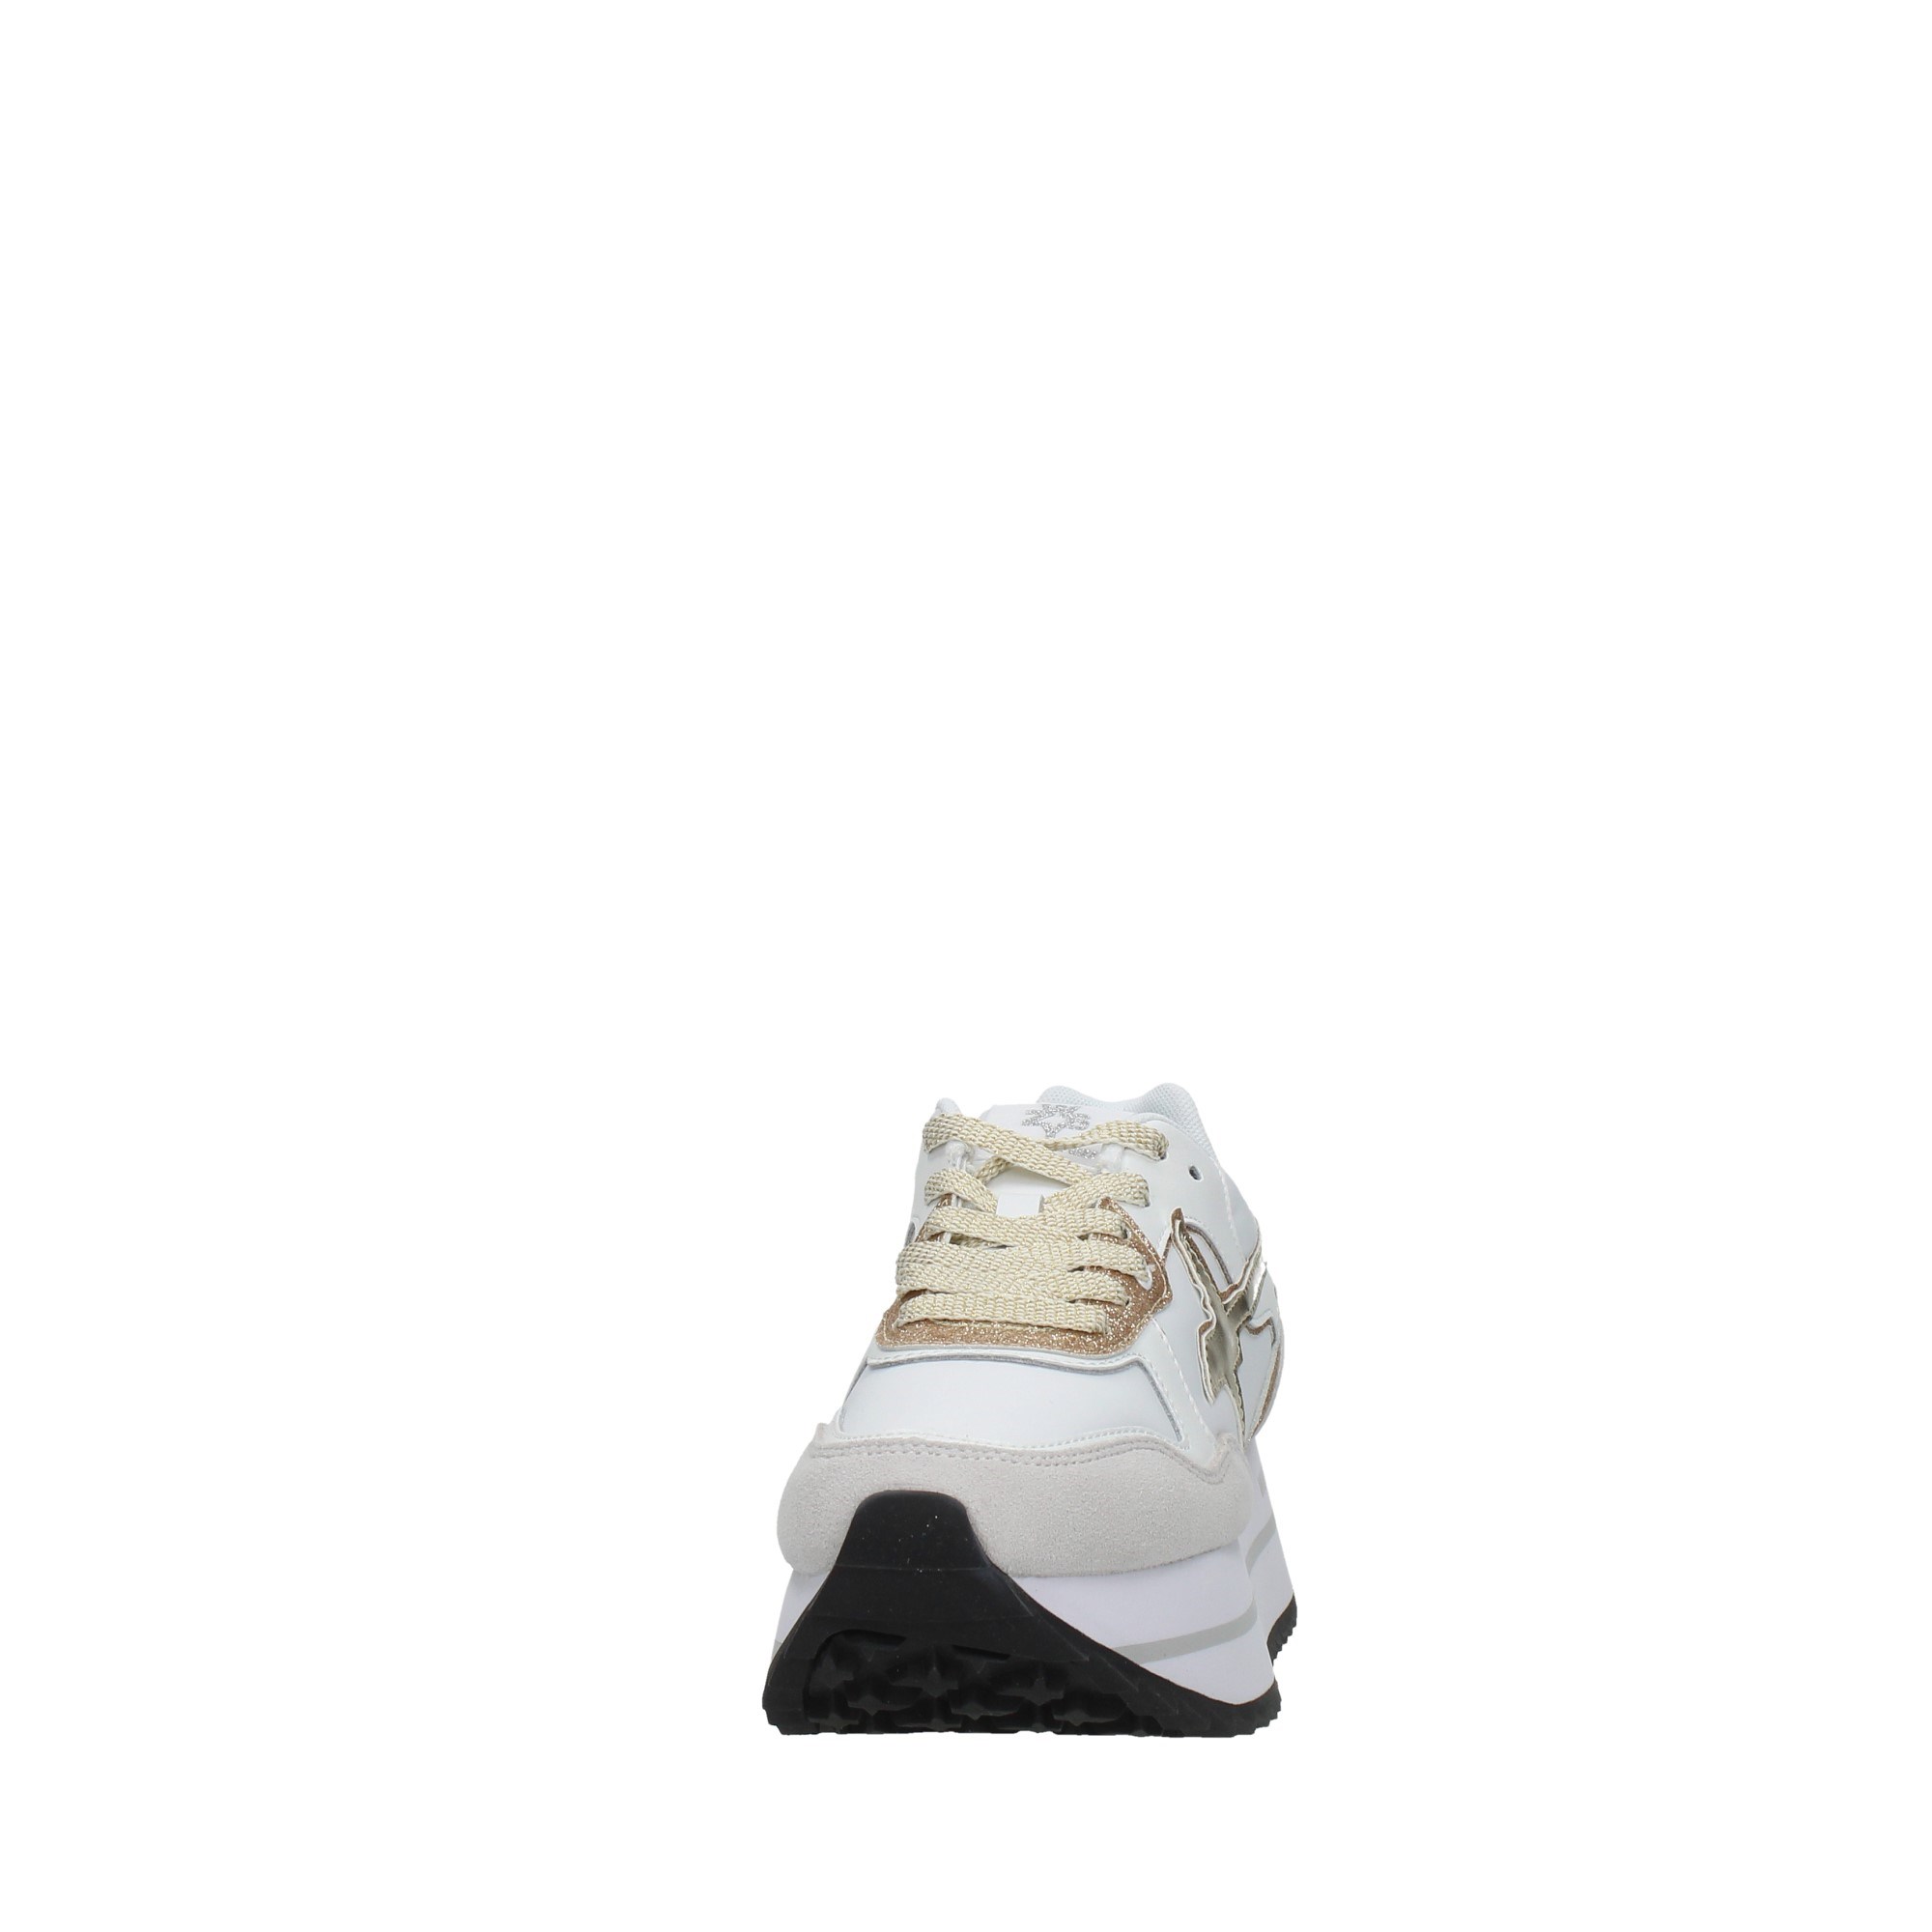 W6yz Scarpe Donna Sneakers Bianco DEVA 1N71